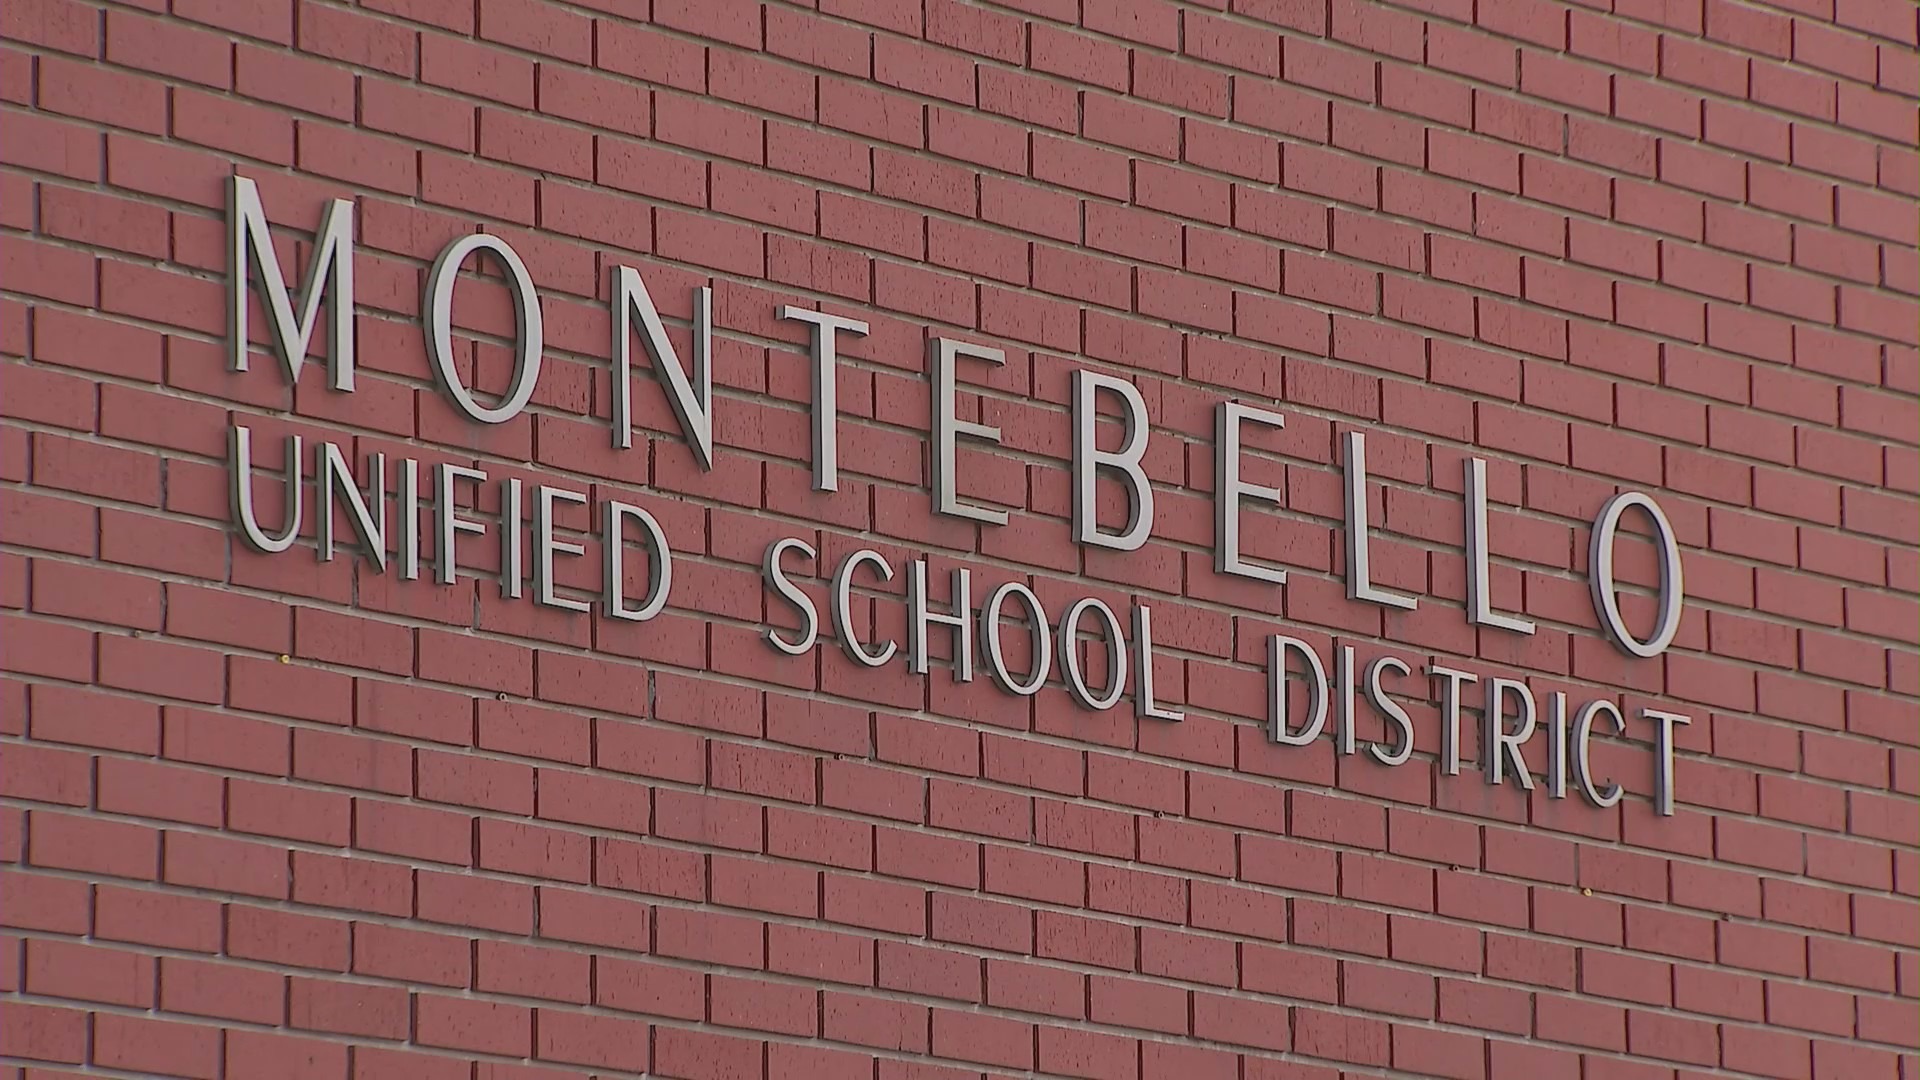 The Montebello Unified School District building. (KTLA)